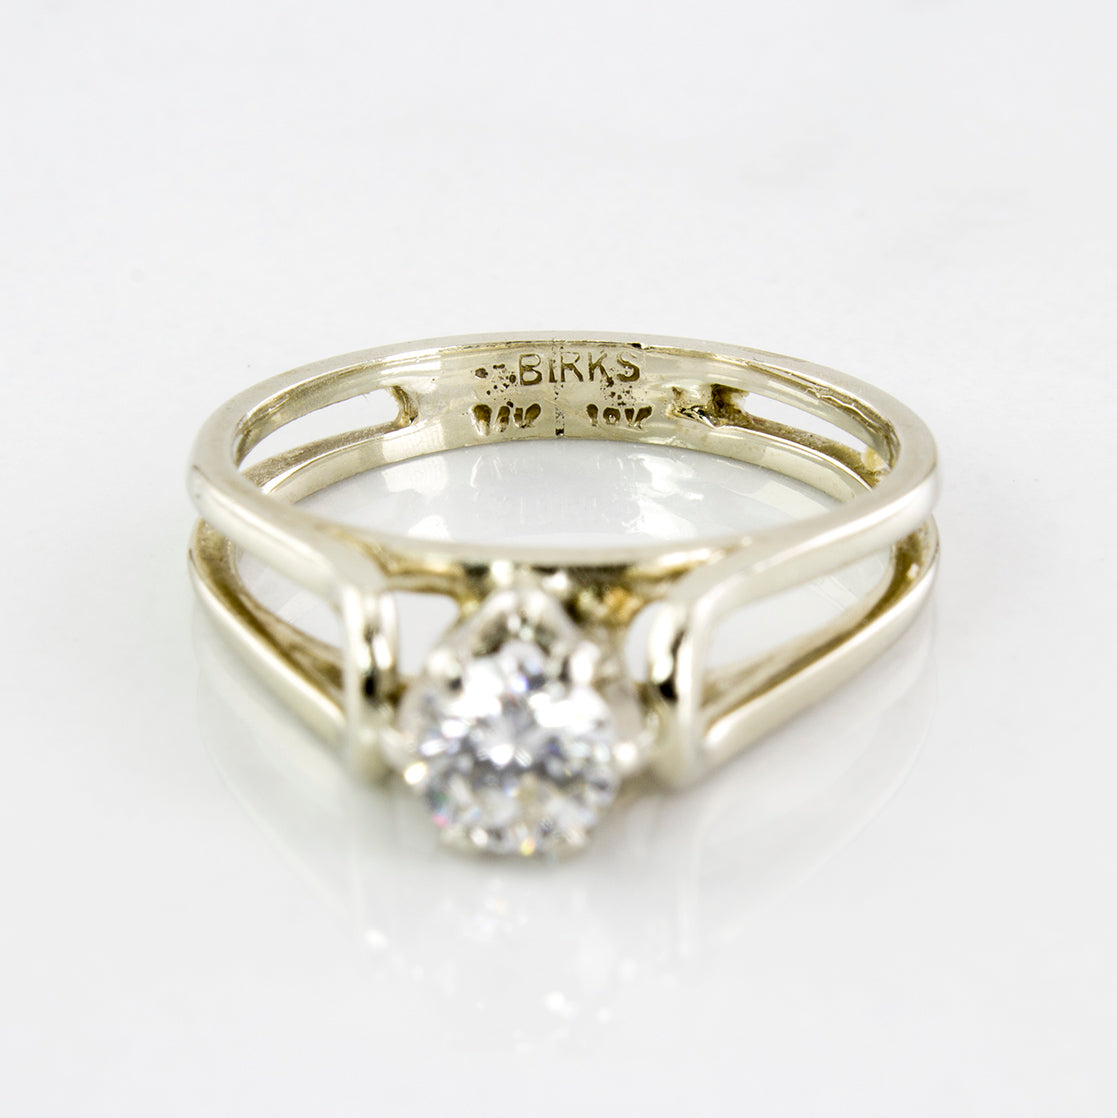 'Birks' Vintage Split Shank Engagement Ring | 0.32 ctw | SZ 4.25 |